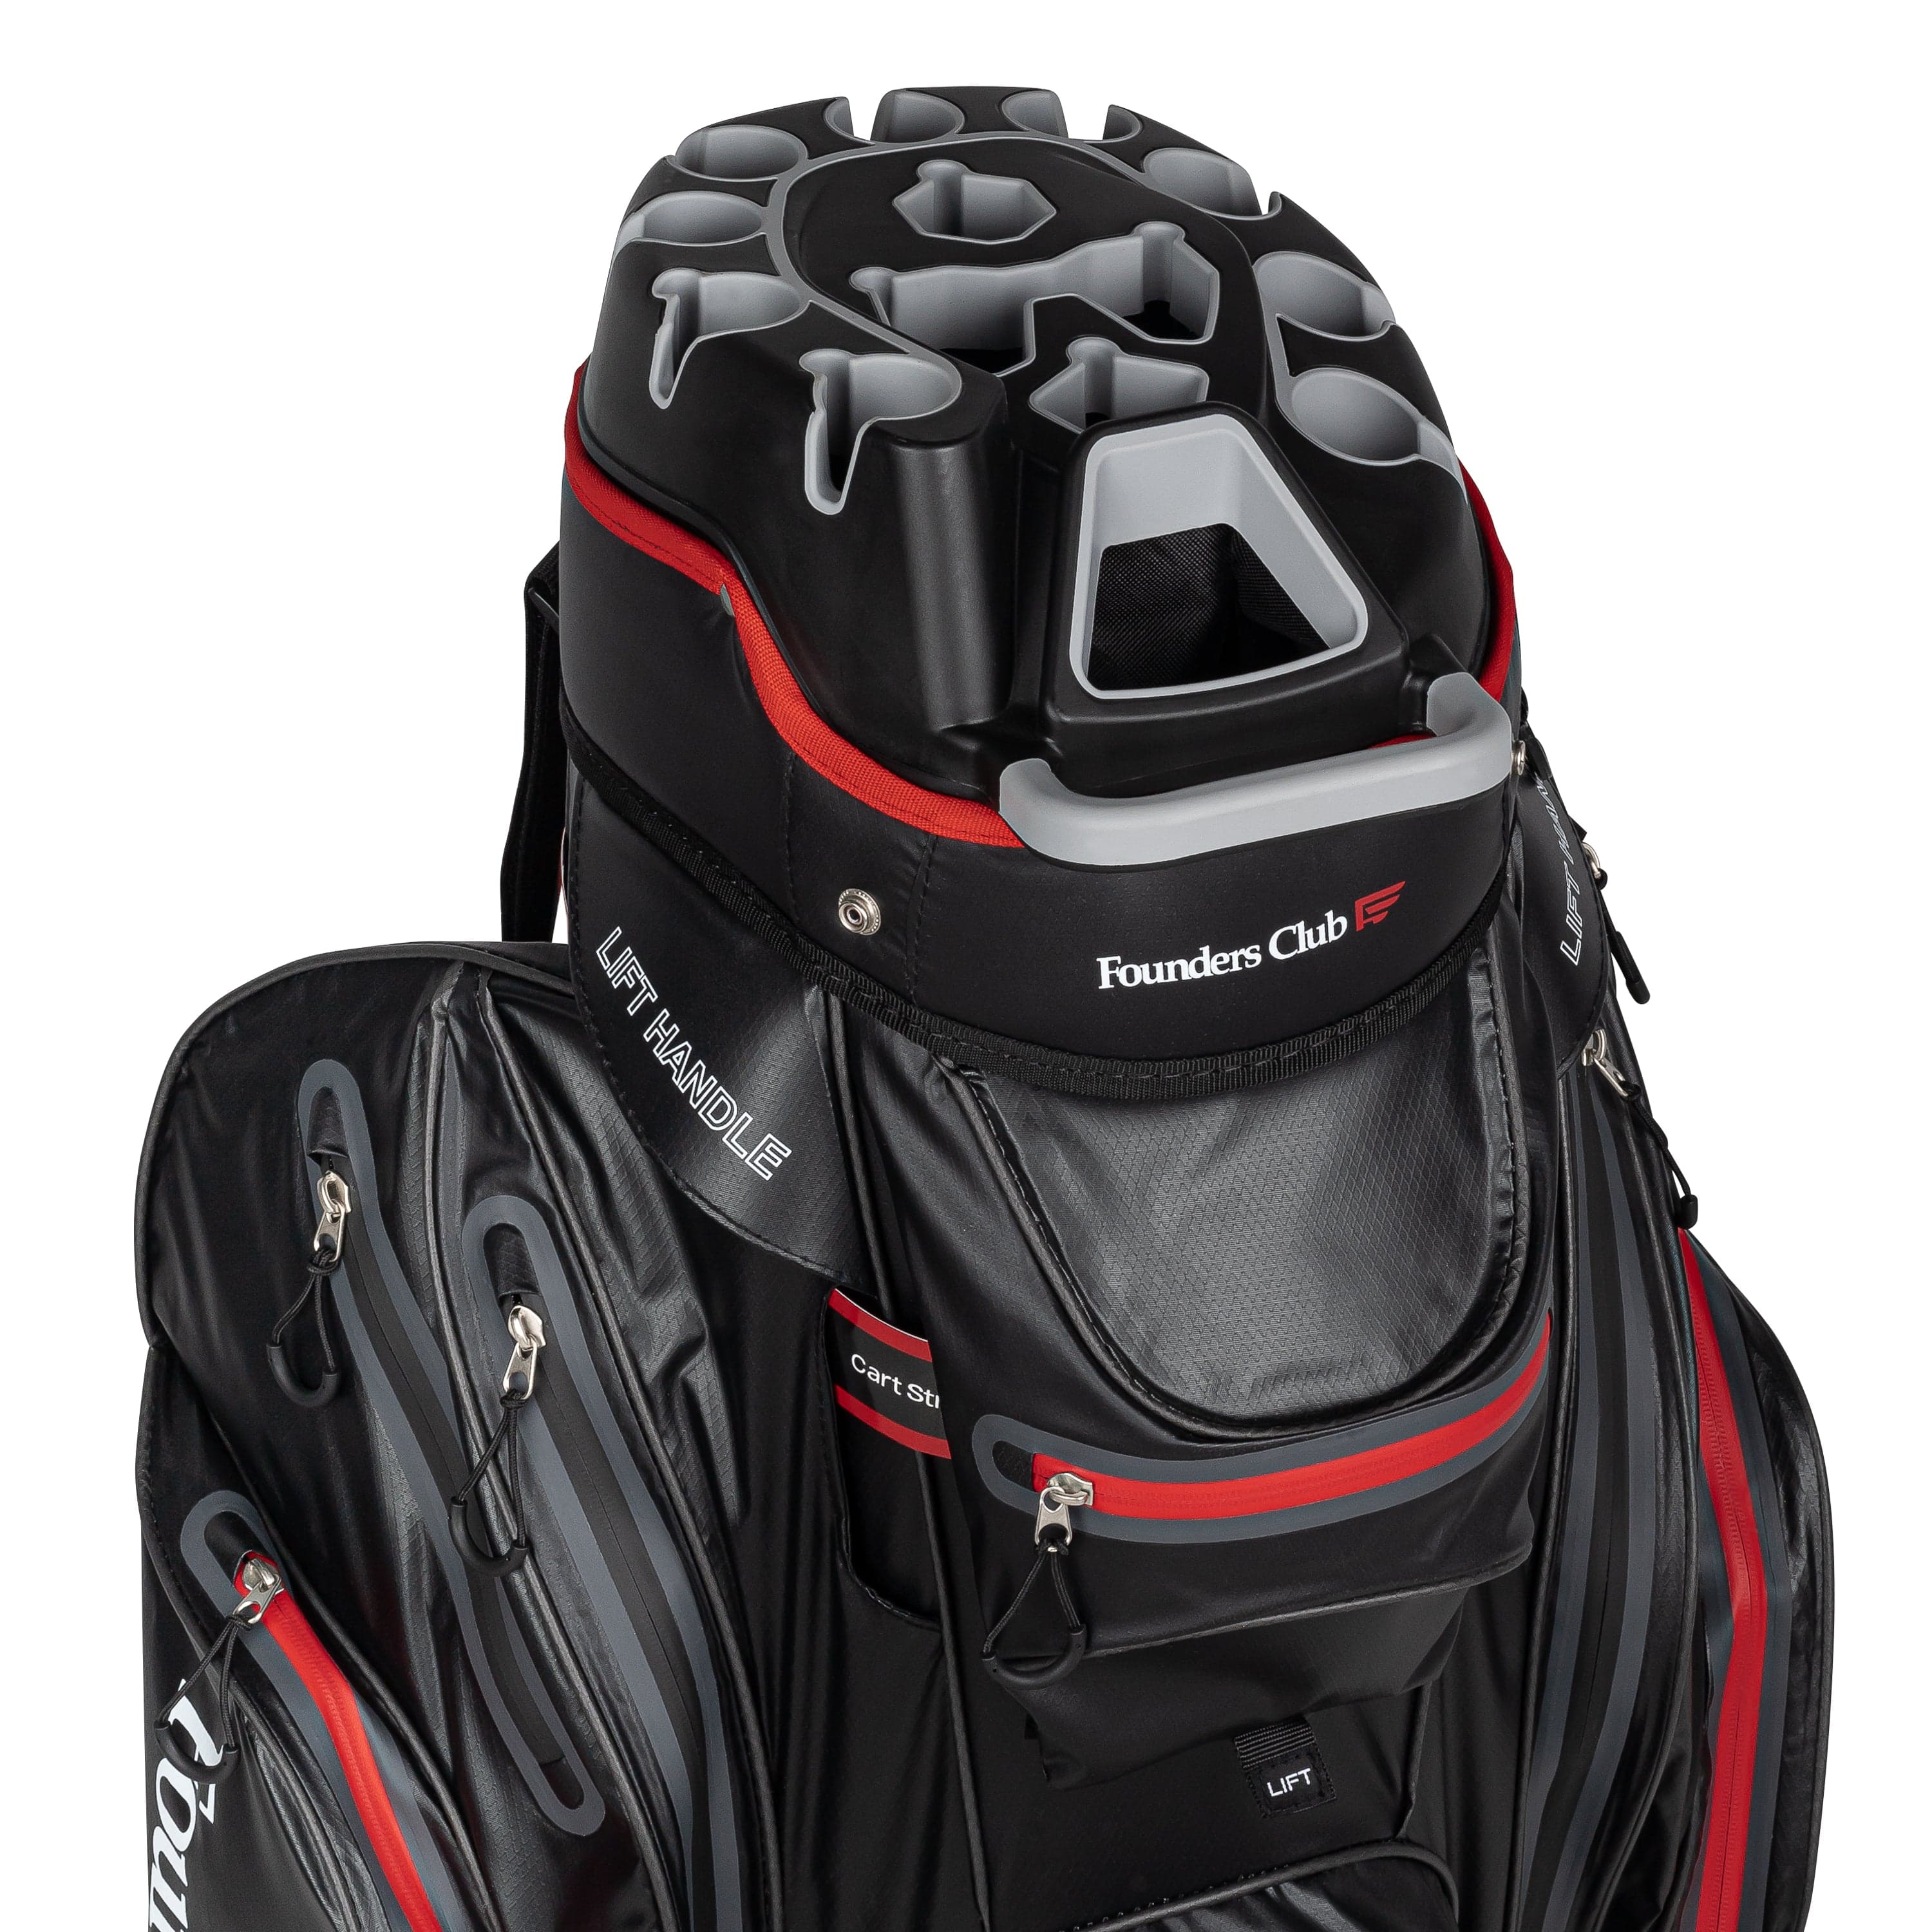 LIVSINGOLF 14 Way Golf Cart Bag for Push Bag Classy Design Full Length with Cooler Rain Hood Putter Well (Blue)